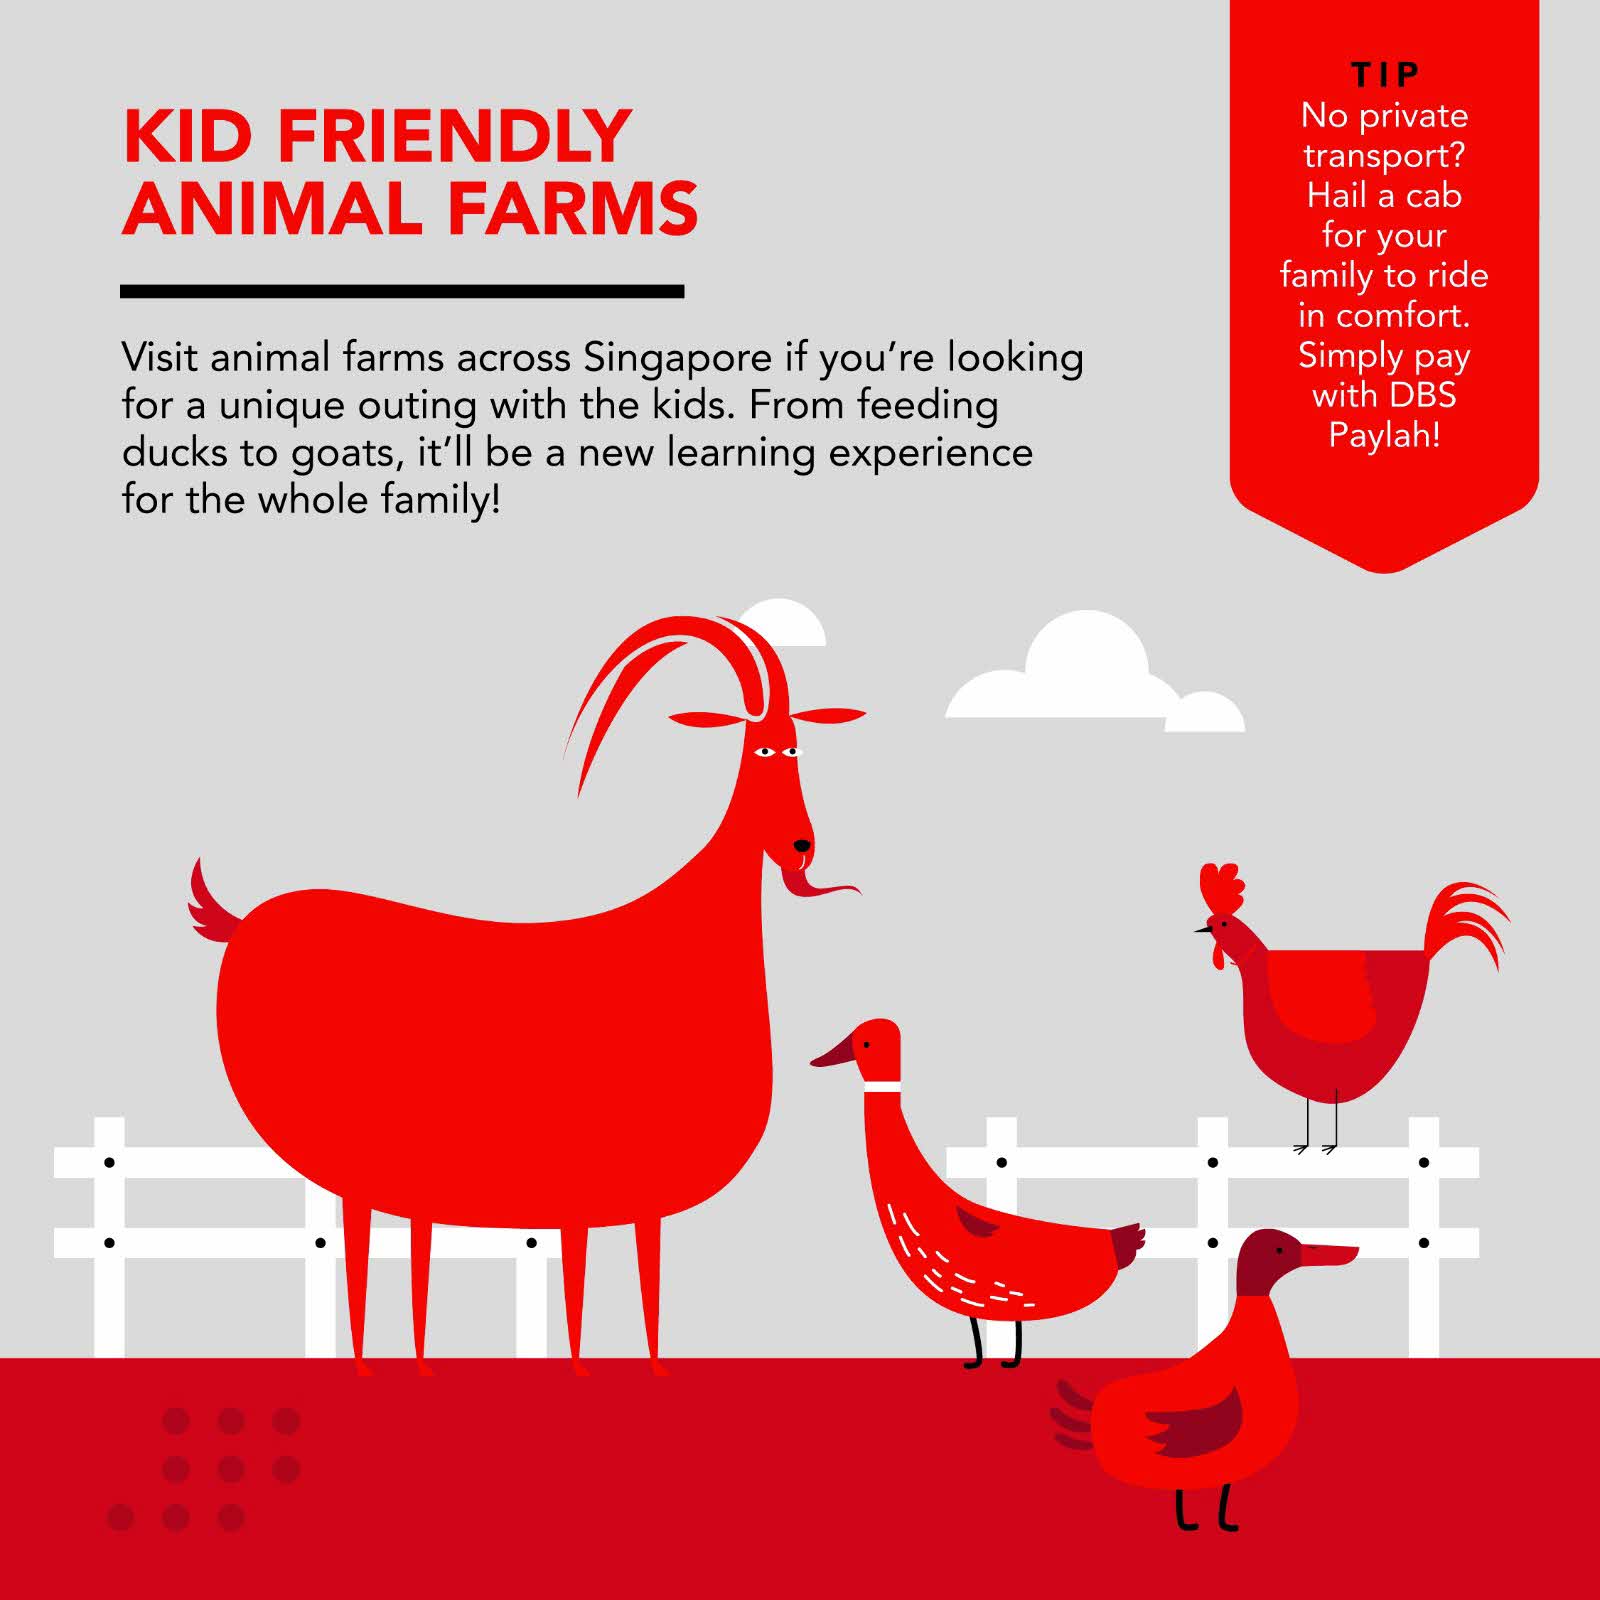 Kid friendly animal farms